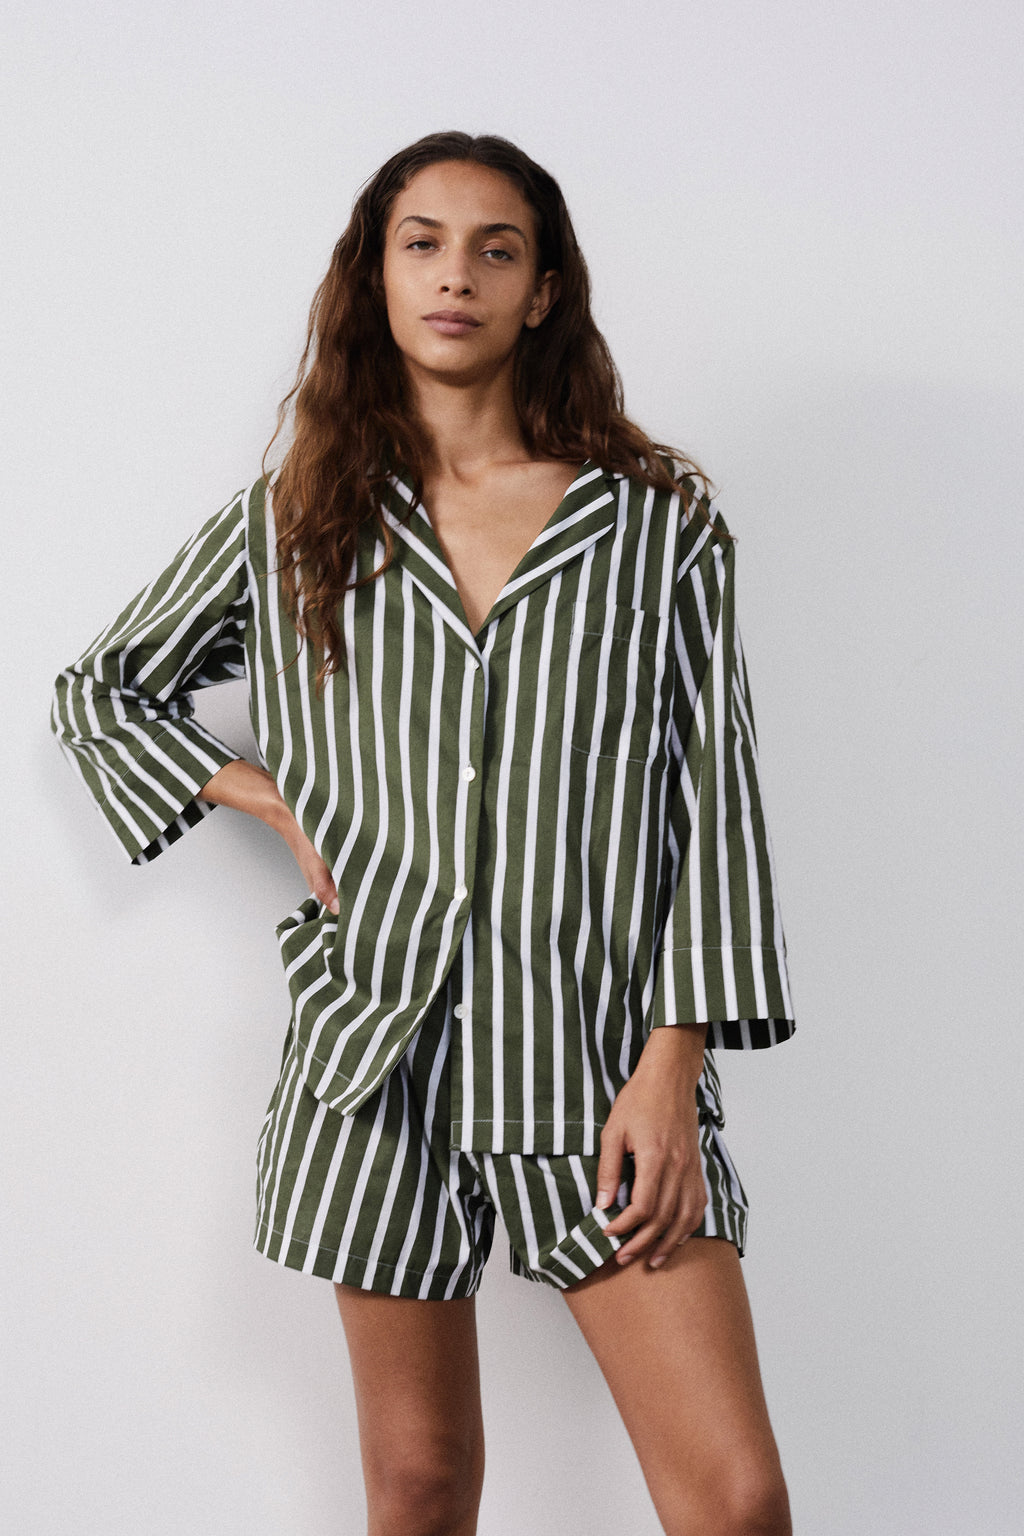 Striped Pyjamas - Women's Stripe Pyjamas - Striped PJ Shorts Sets